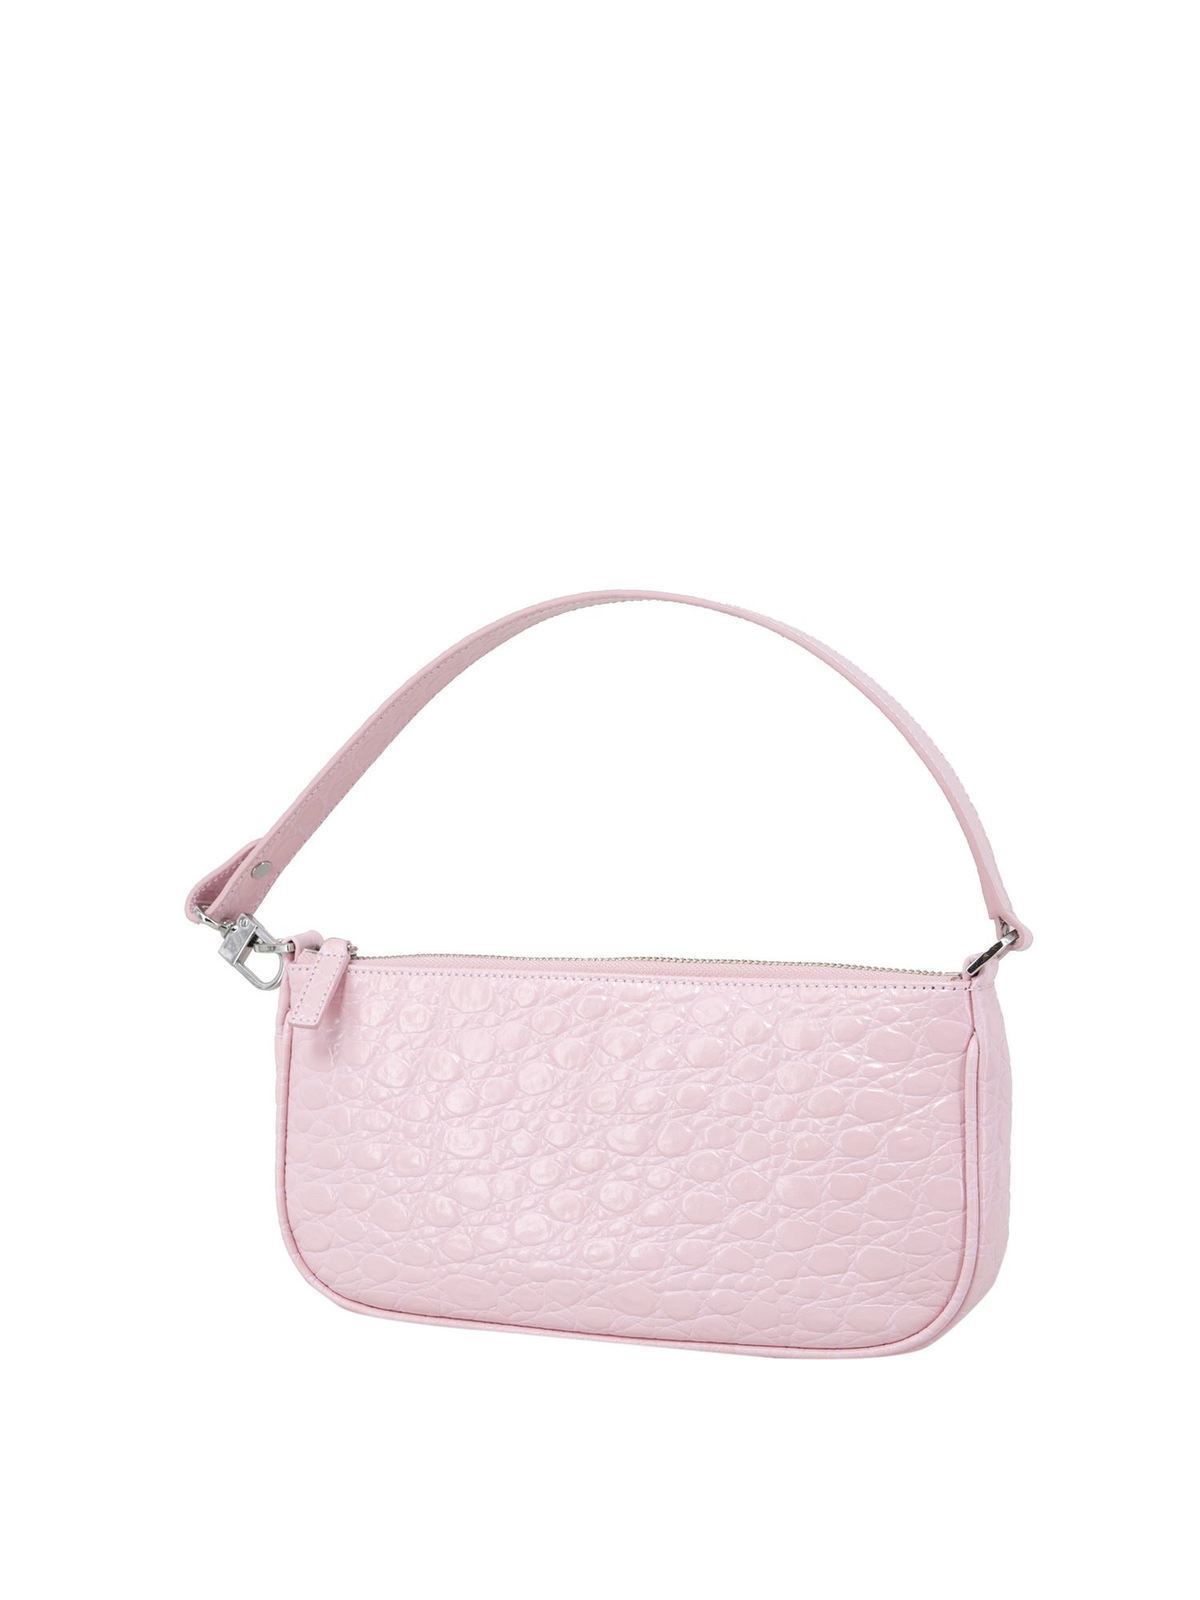 BY FAR: Pink Mini Rachel Shoulder Bag